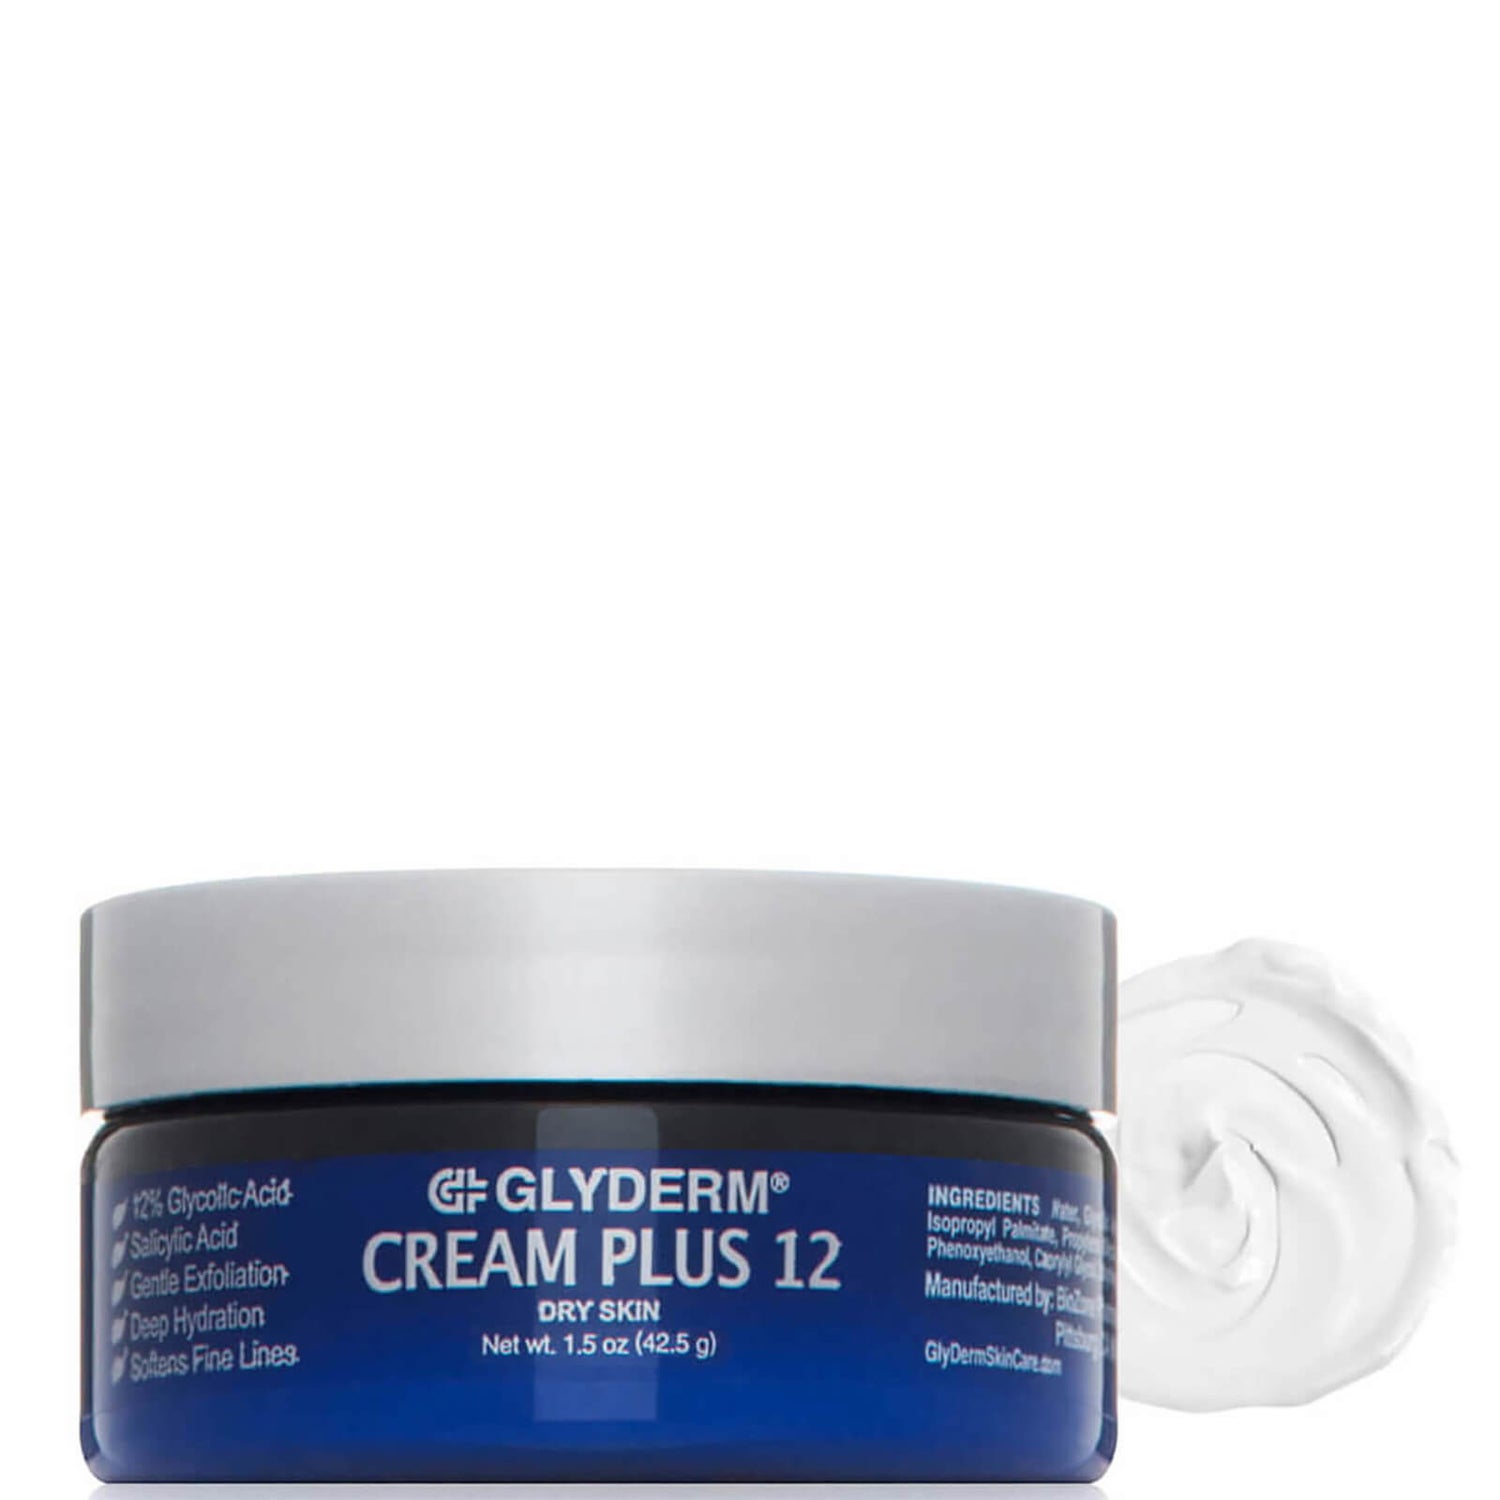 GlyDerm Cream Plus 12 (1.5 oz.)